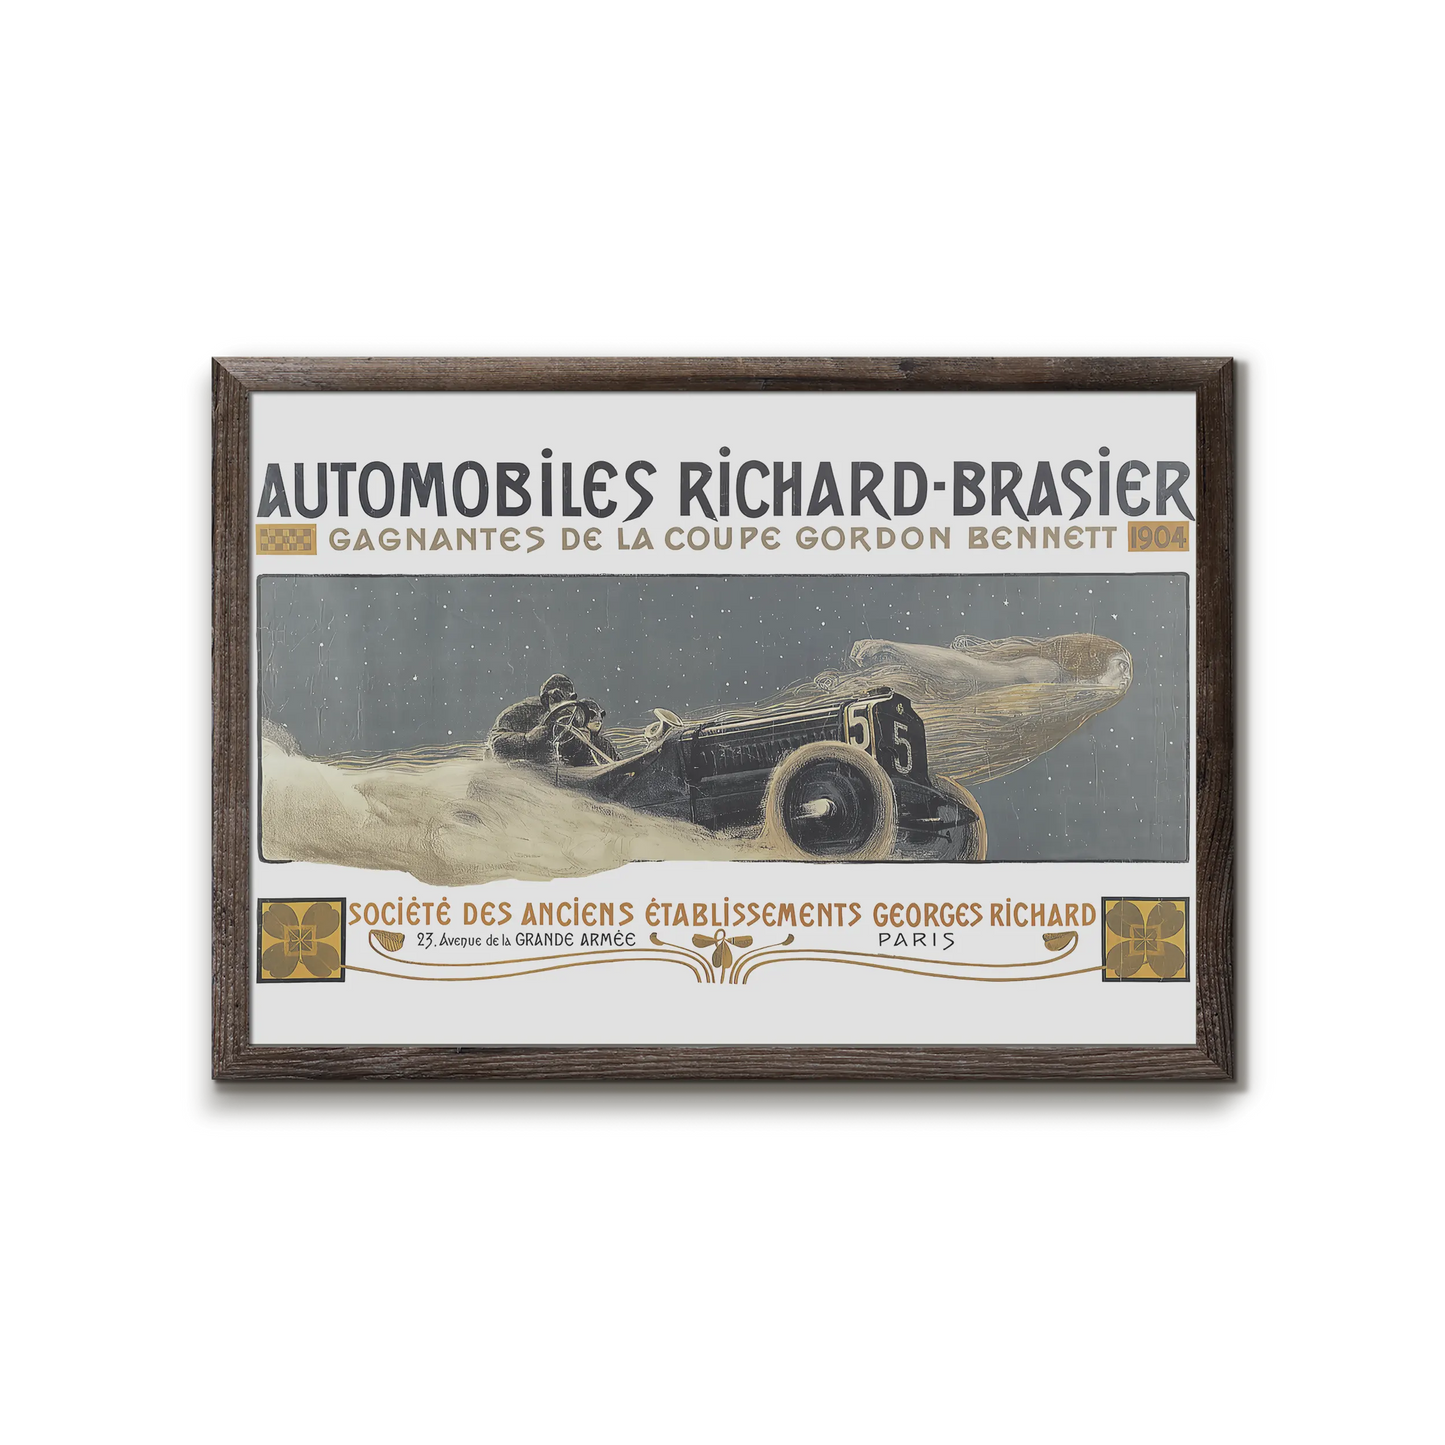 Automobiles Richard-Brasier - klassisk bil reklame